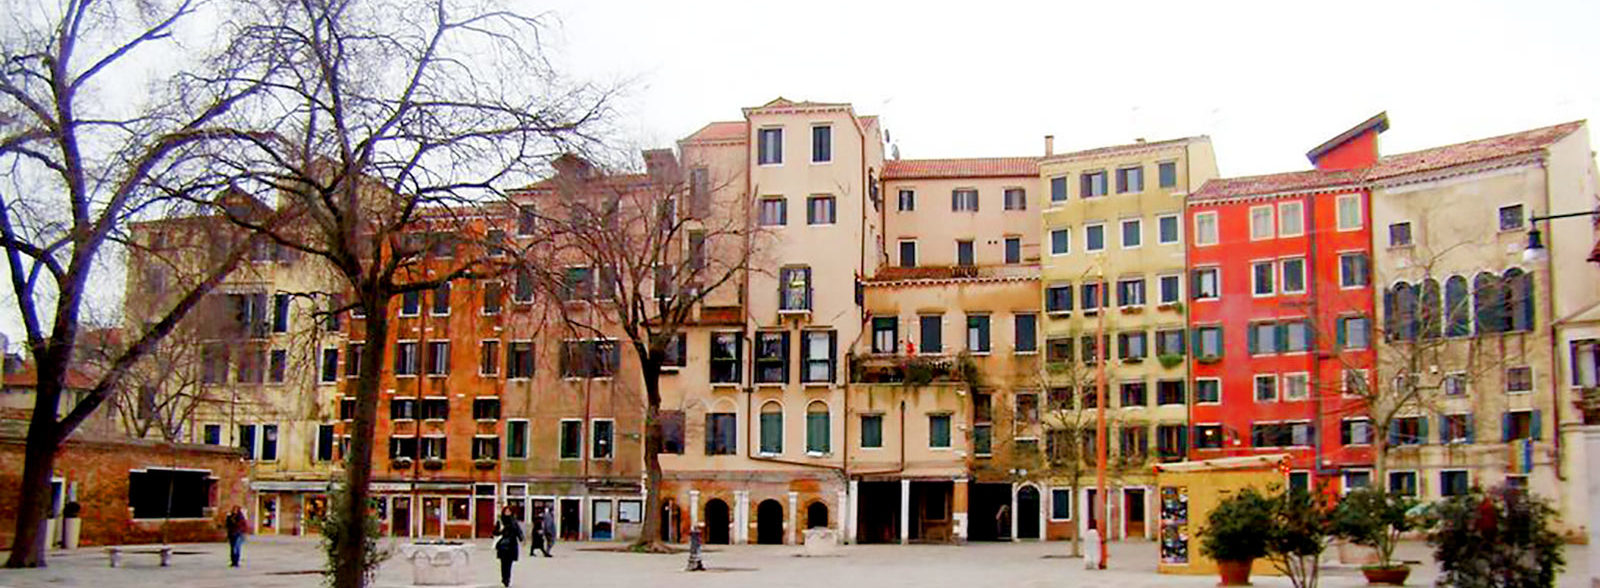 Venice Jewish ghetto:  discovering the neighborhood